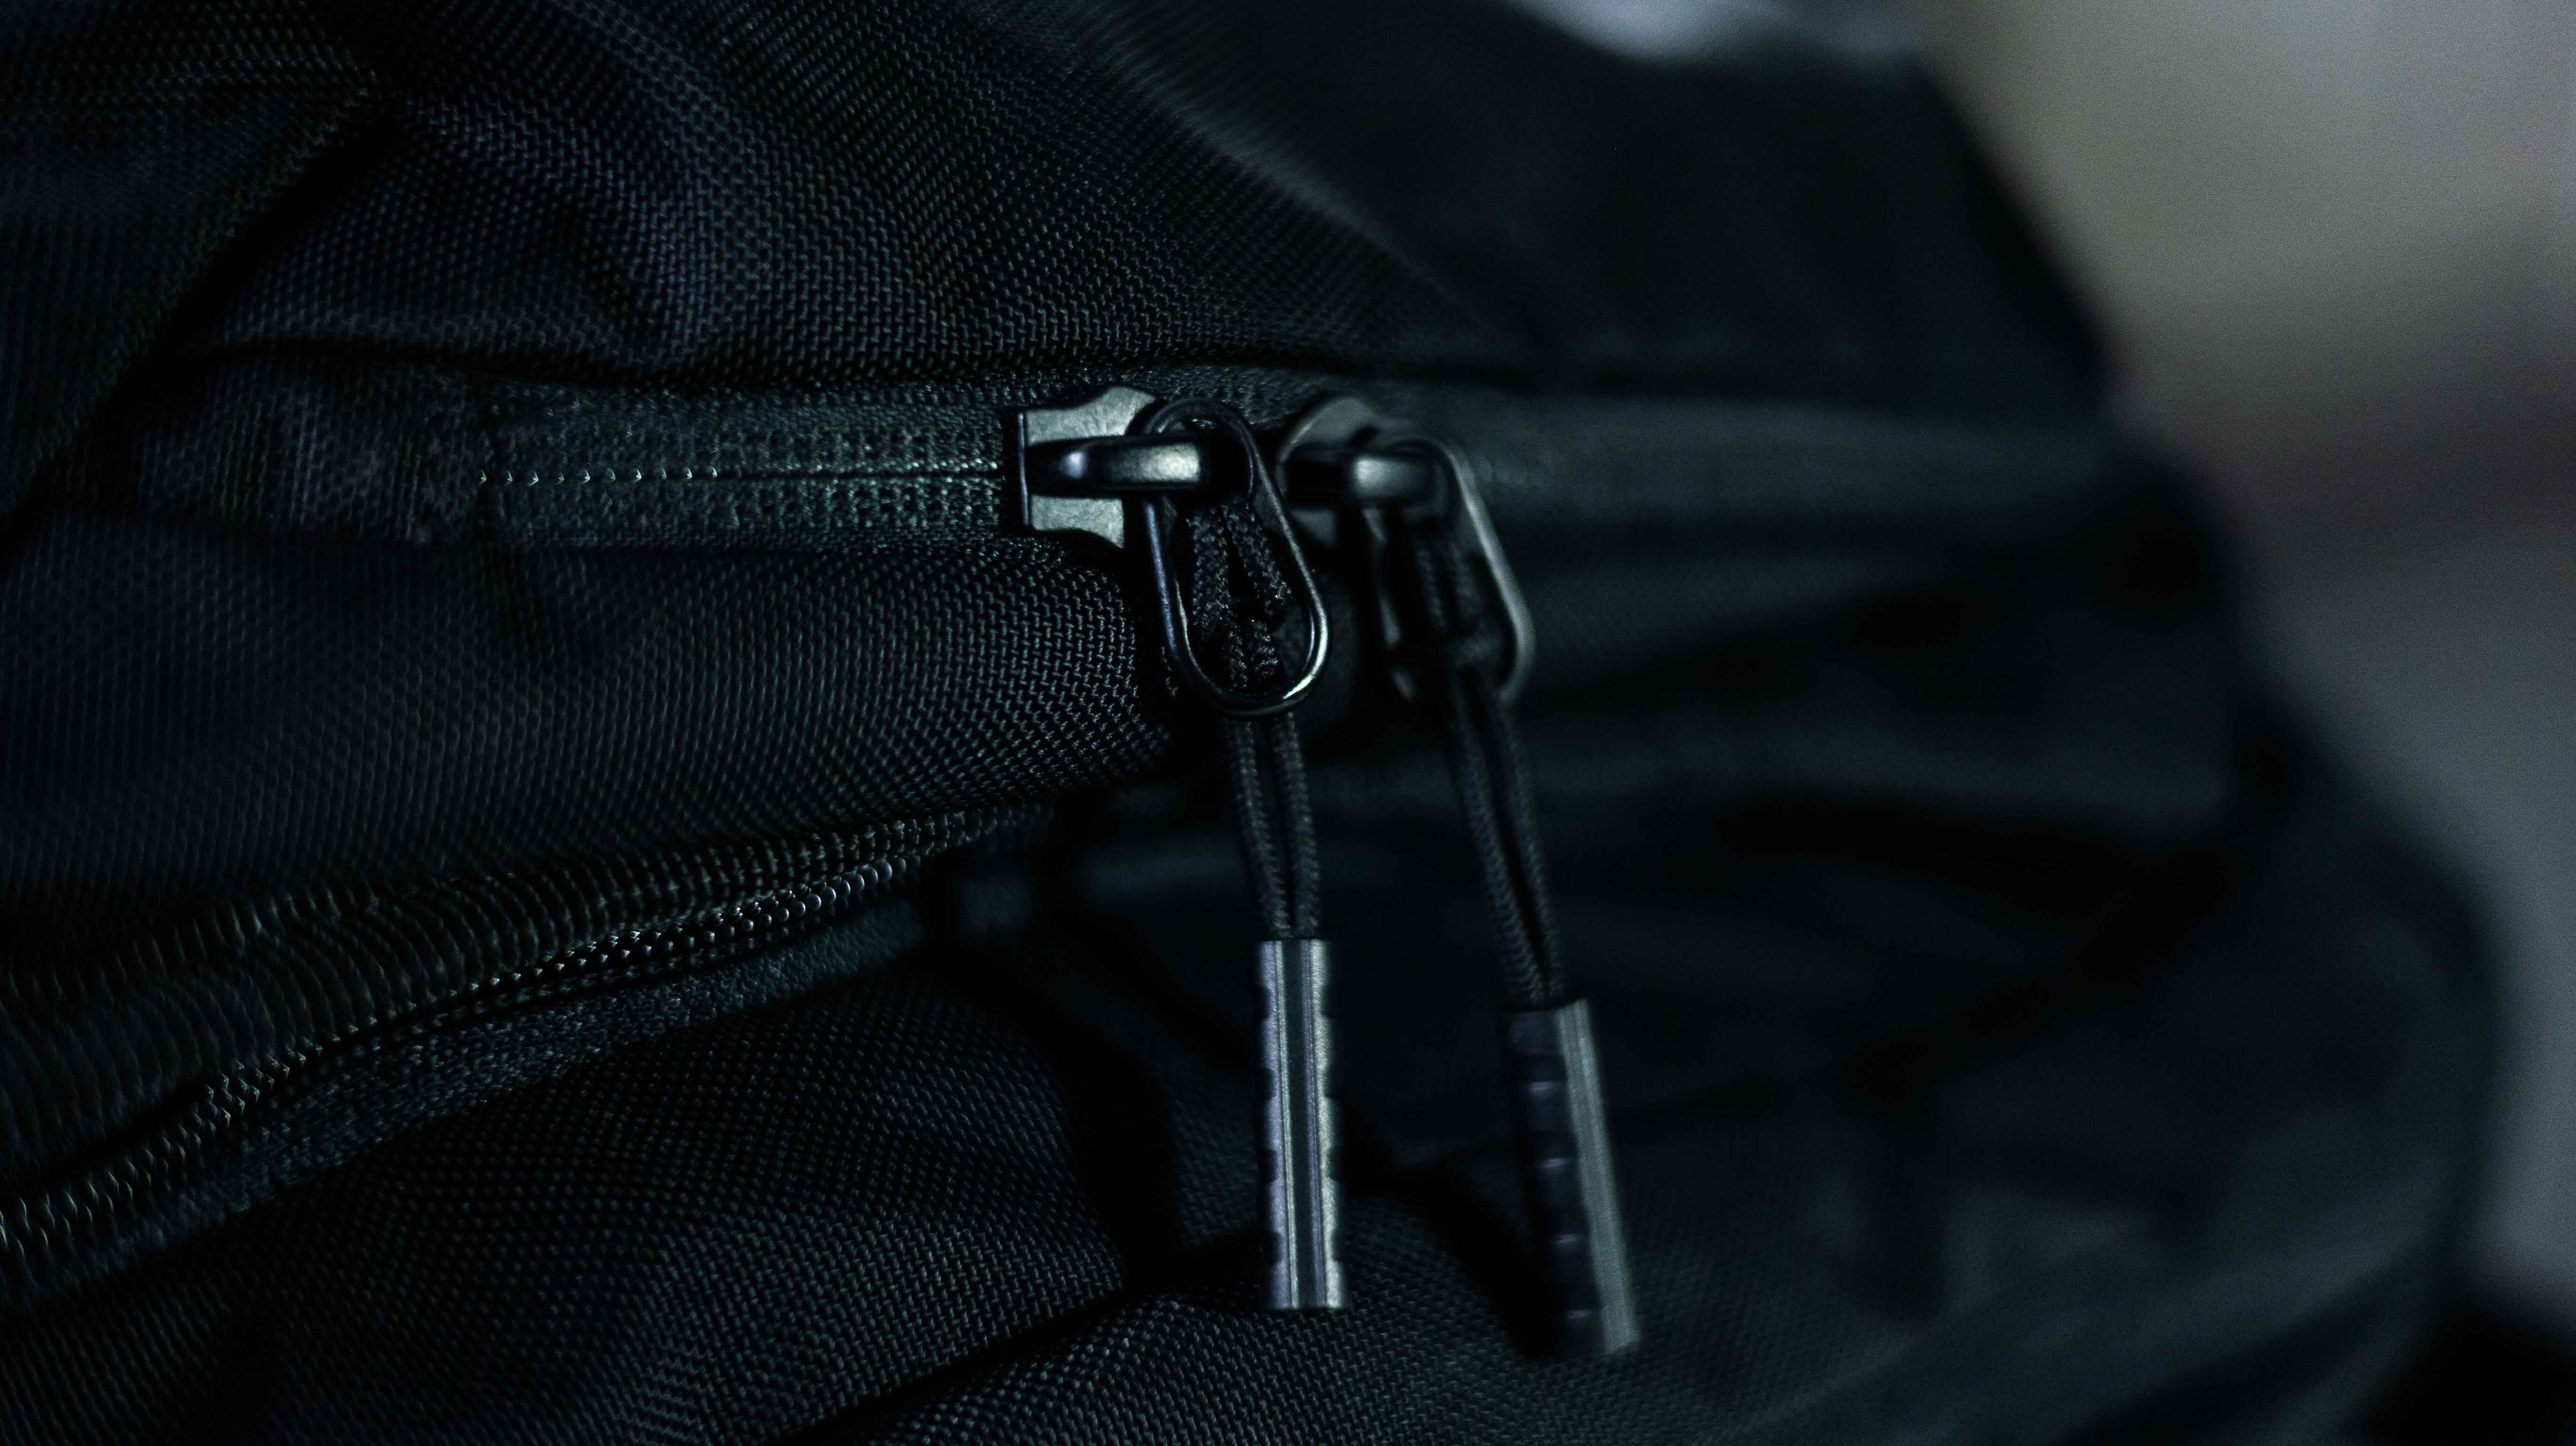 5.11 Tactical LV18 Backpack 2.0 30L